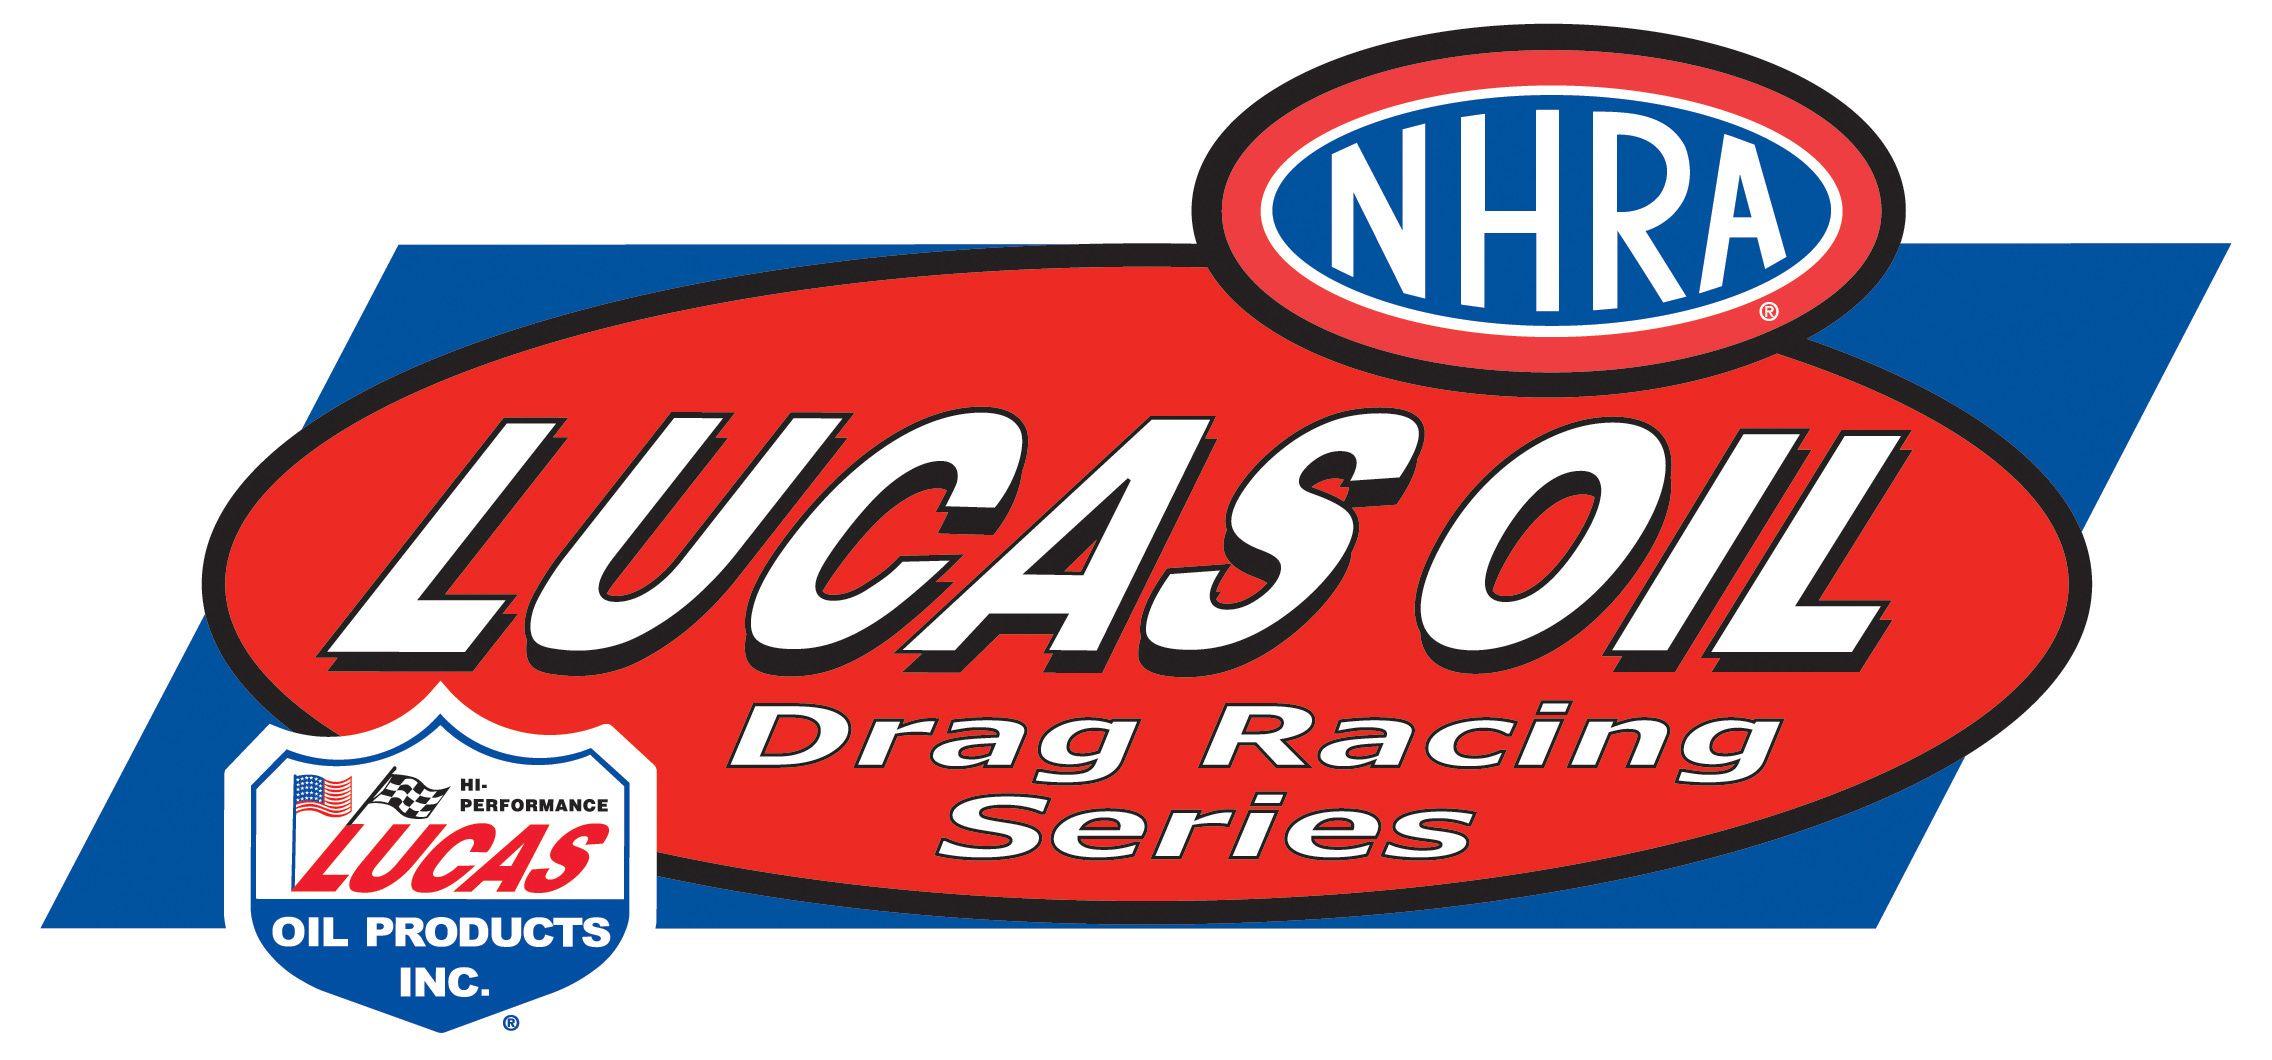 NHRA Drag Racing Logo - DragRaceResults.com - Sportsman Drag Racing and Drag Racers